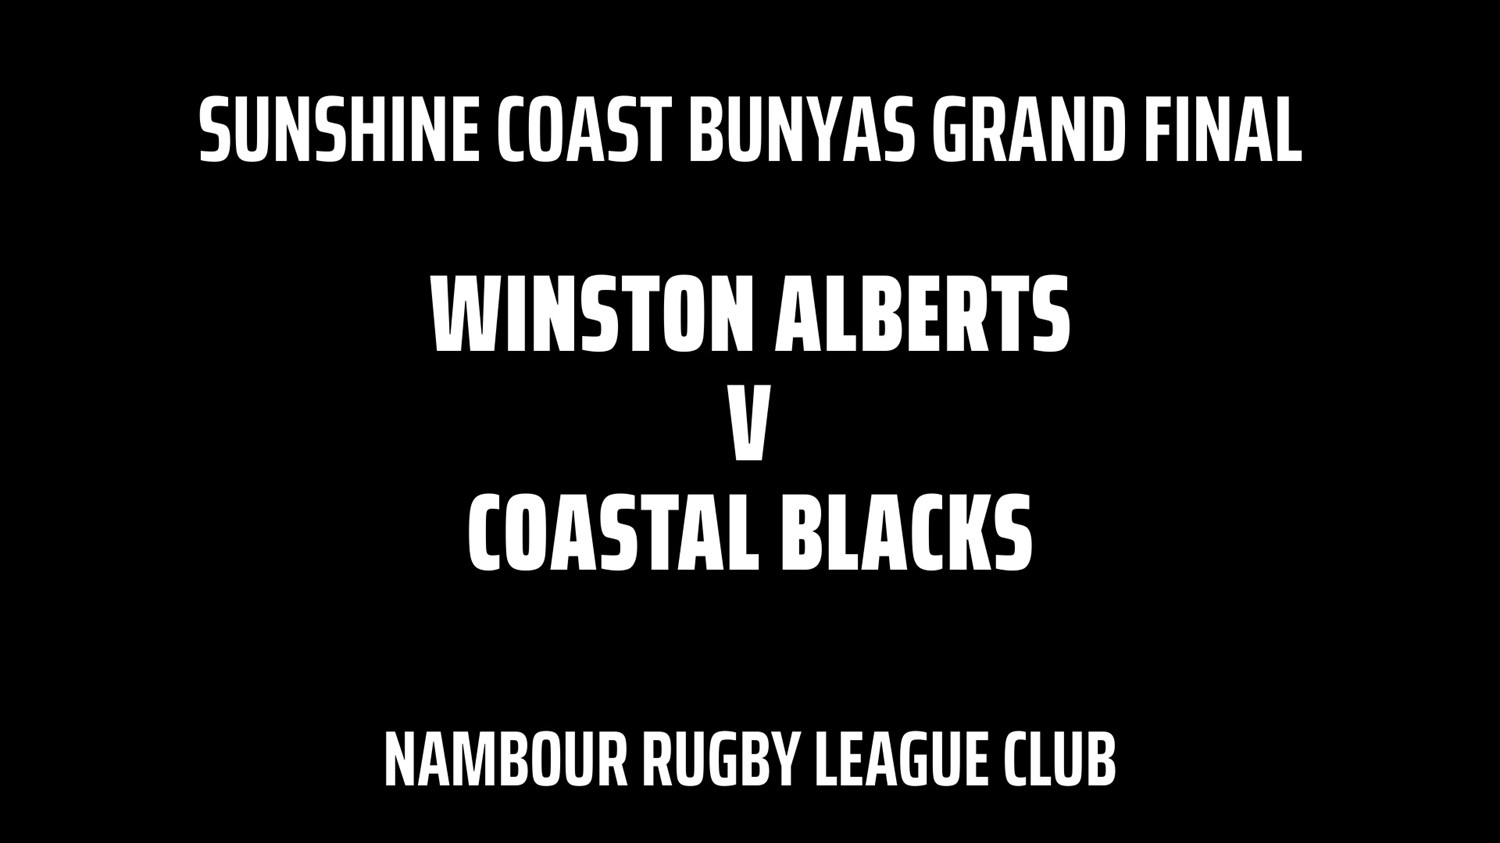 240211-Sunshine Coast Bunyas Grand Final - WINSTON ALBERTS MEMORIAL v COASTAL BLACKS Minigame Slate Image